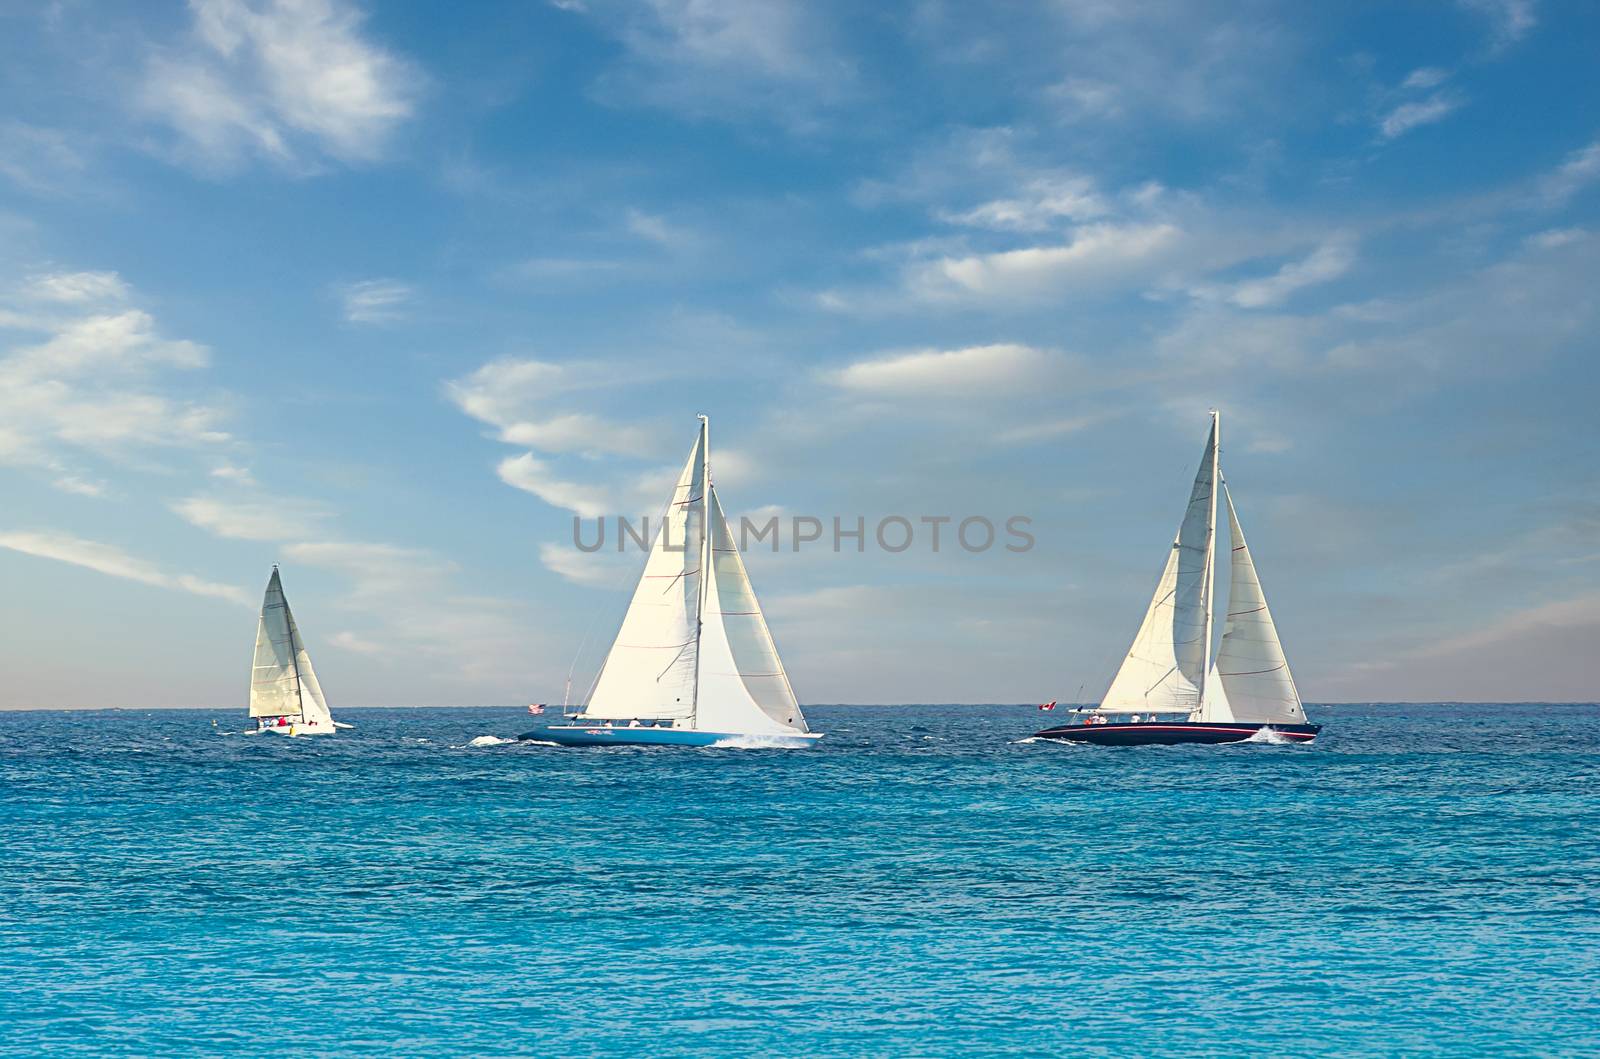 Three sailboats on the horizon in the ocean